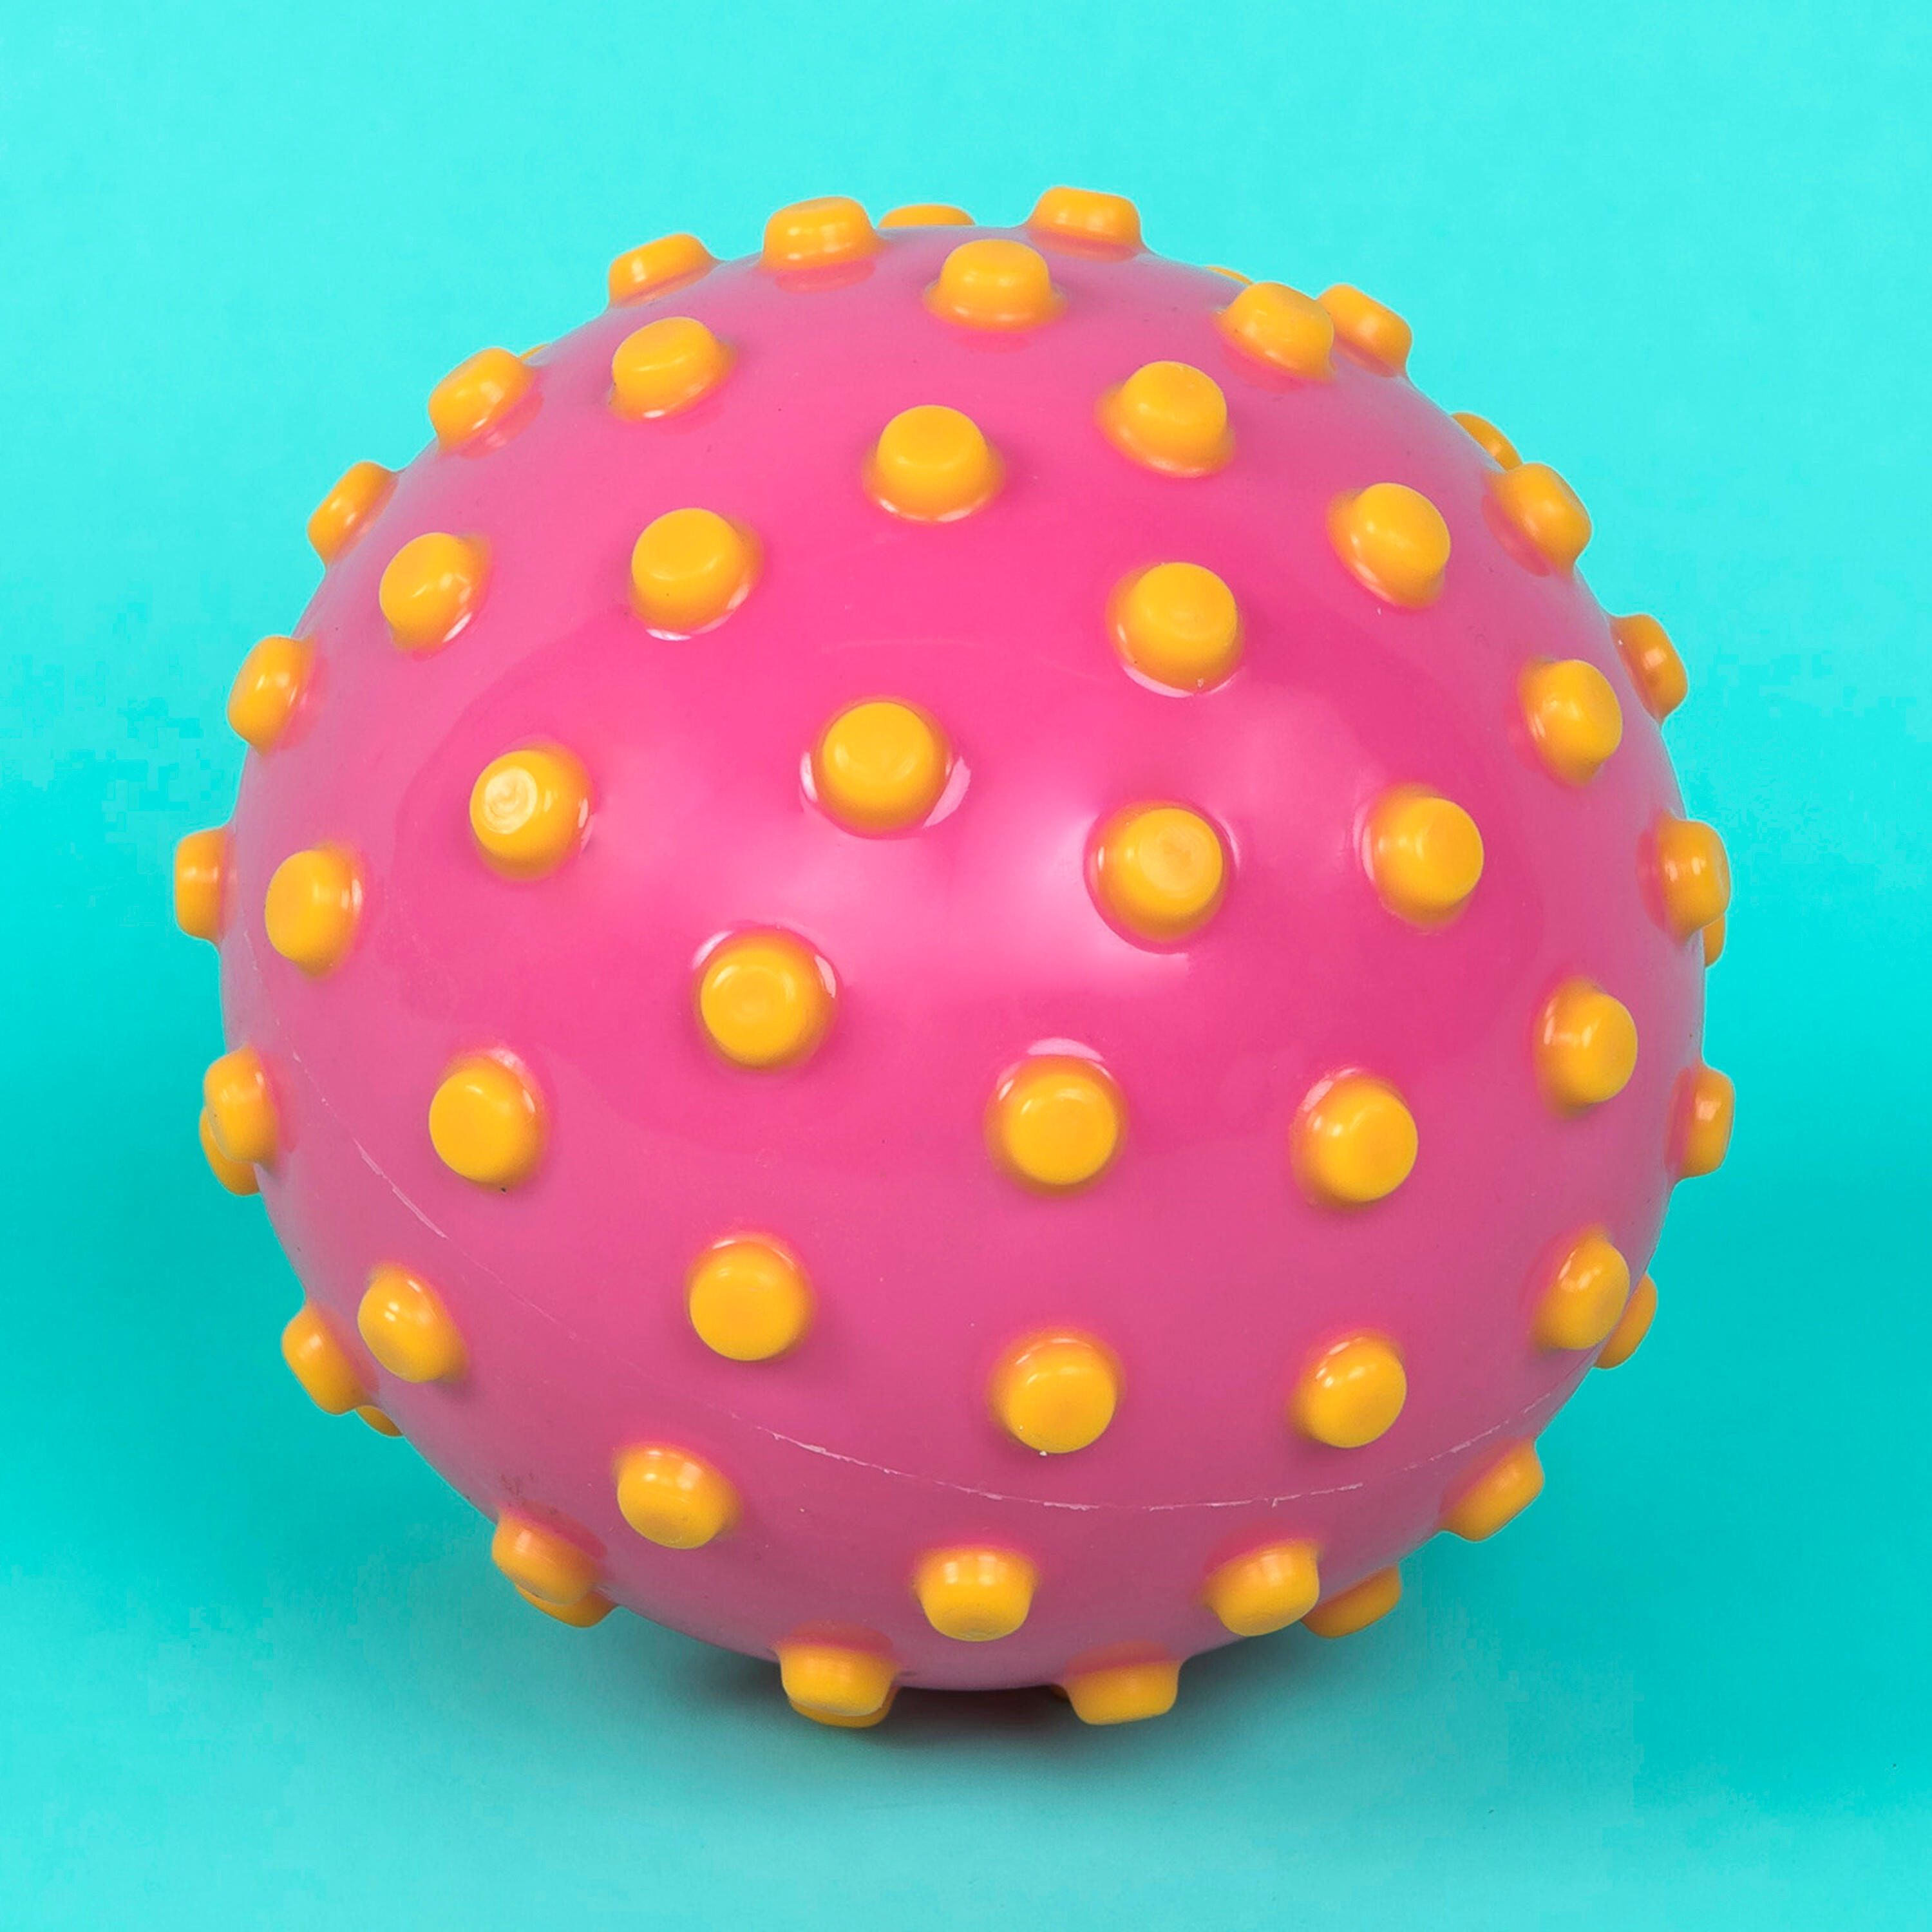 Small aquatic awakening balloon, pink with yellow dots 3/3